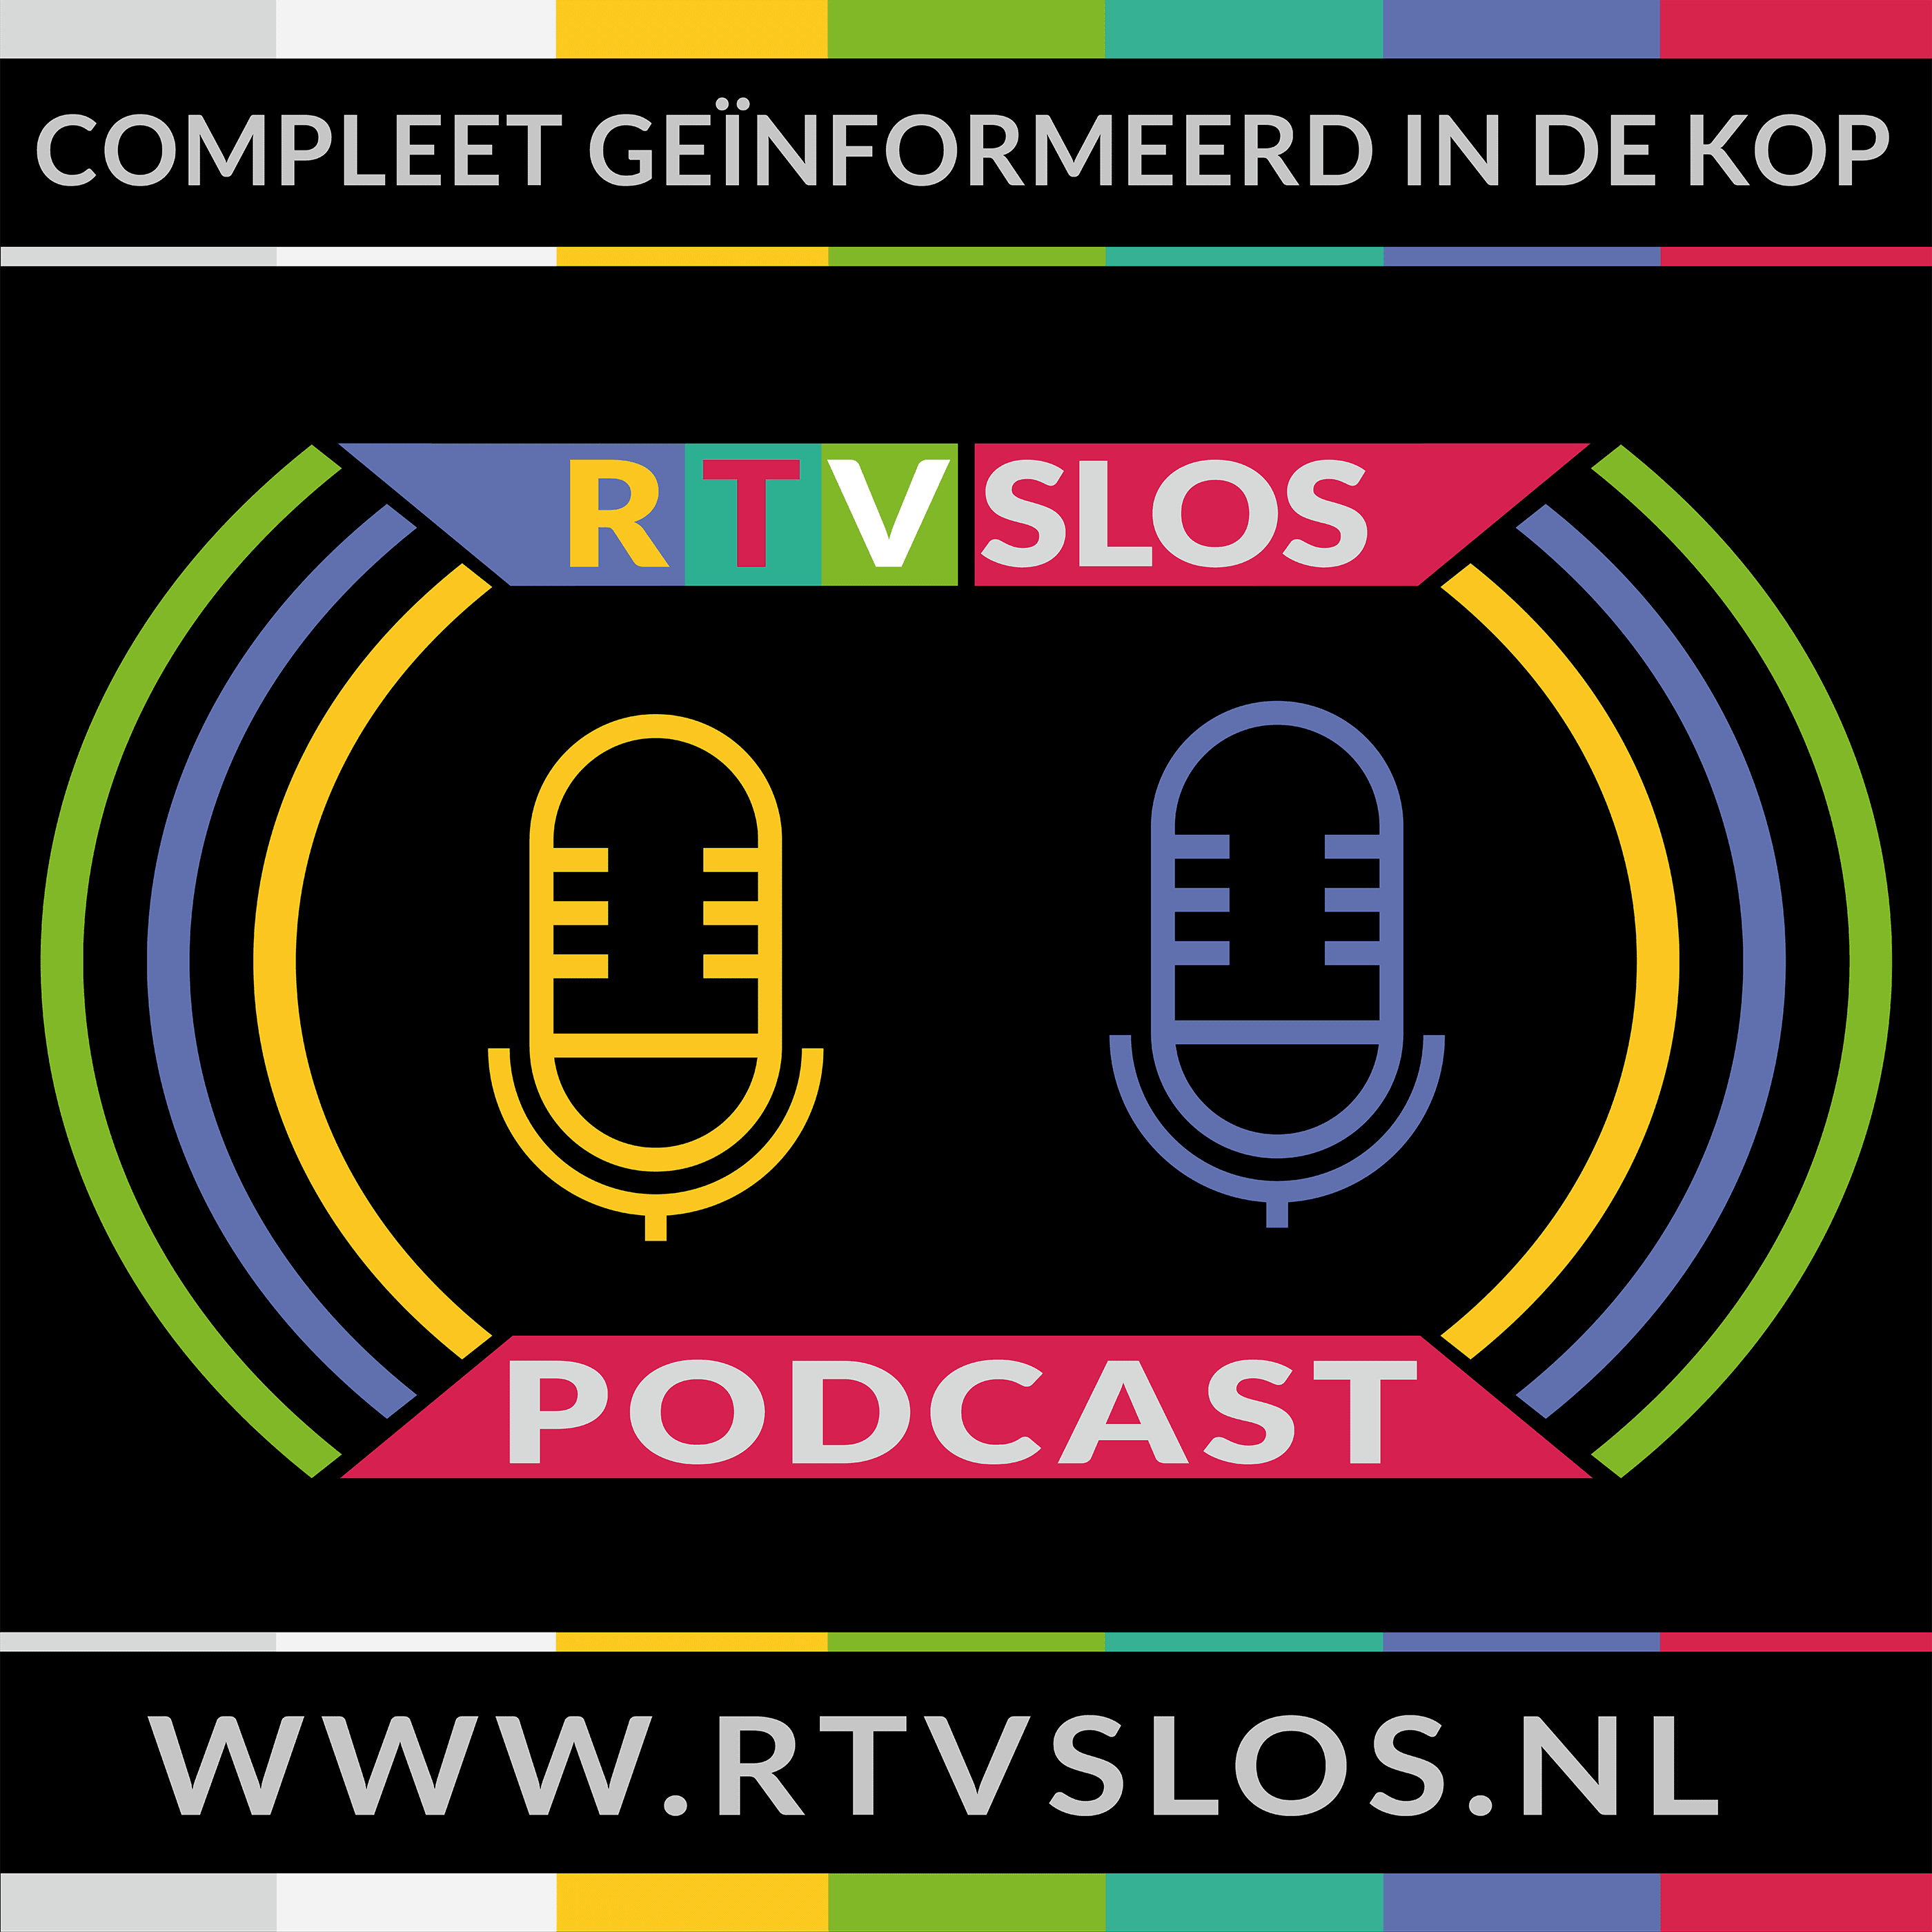 slos-podcast-vierkand-small